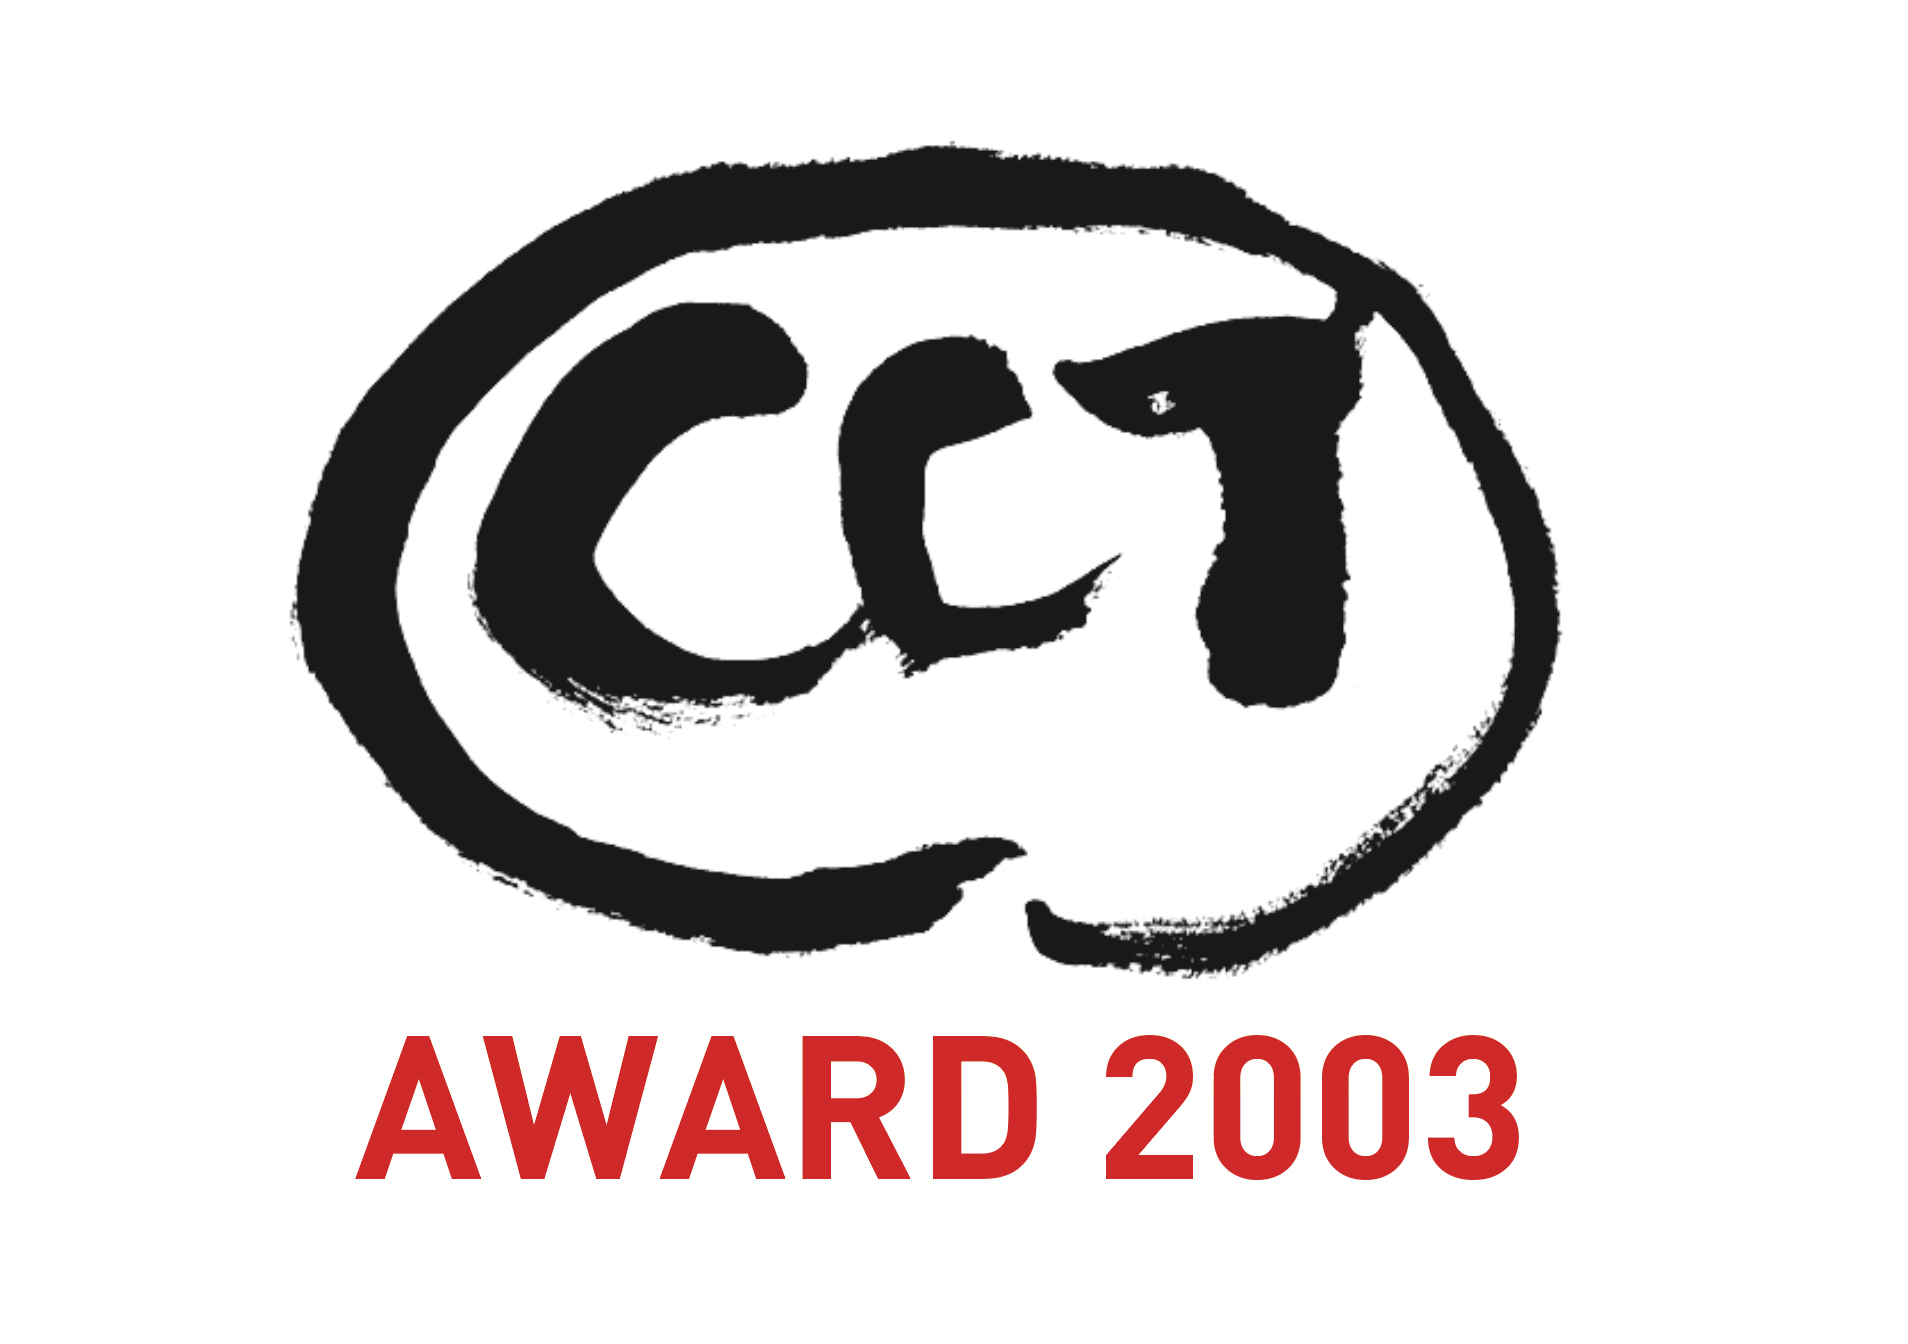 CCT AWARD 2003